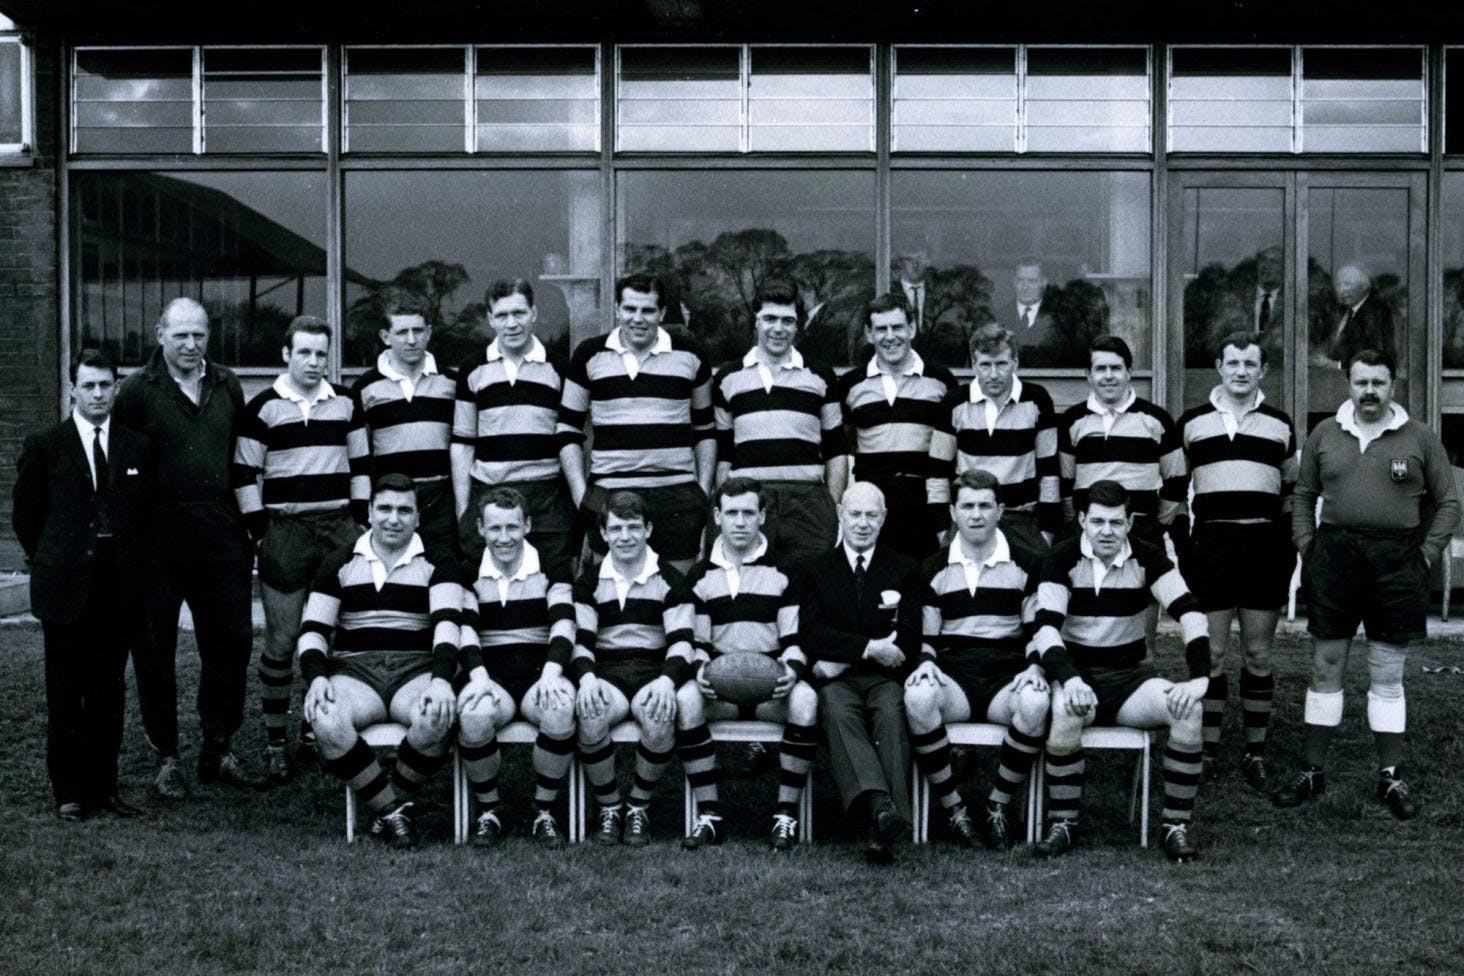 1964-1965 Wasps Rugby Team Photo